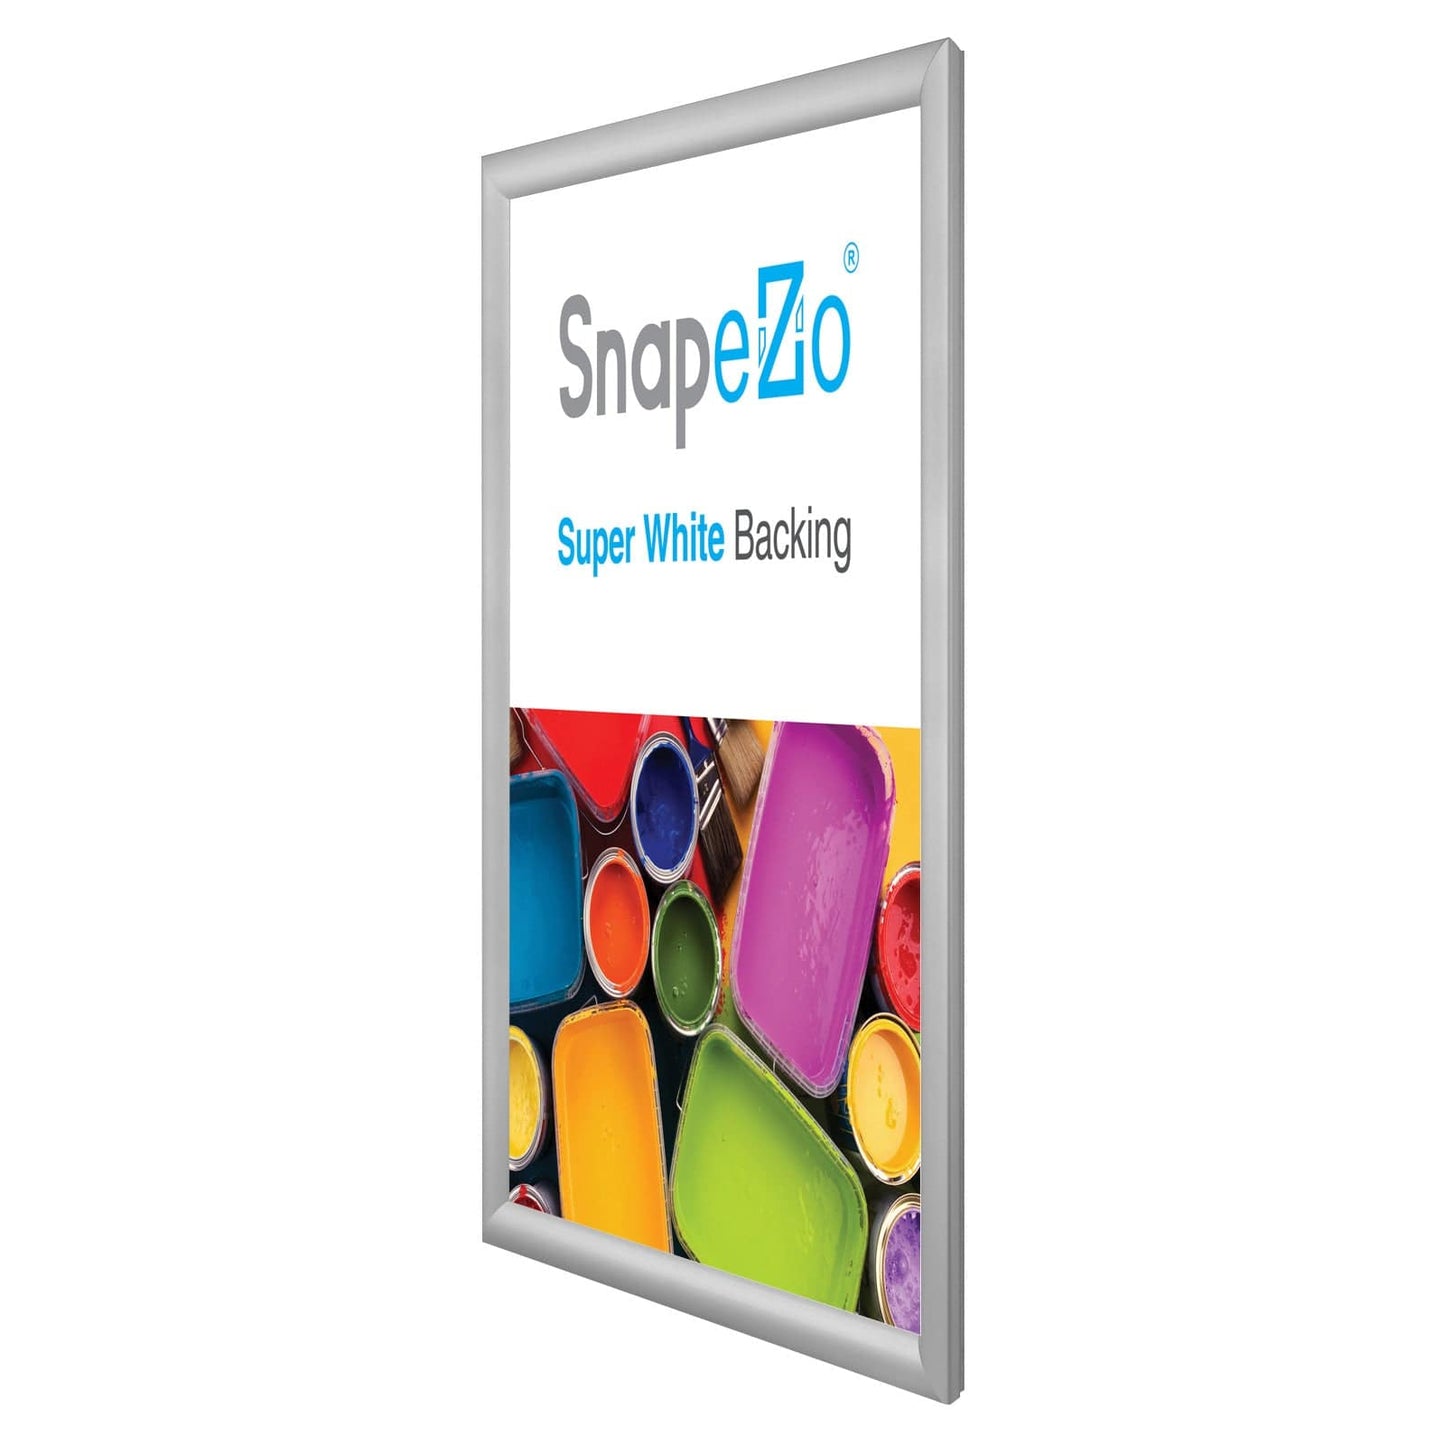 12x16 Silver SnapeZo® Snap Frame - 1.2" Profile - Snap Frames Direct